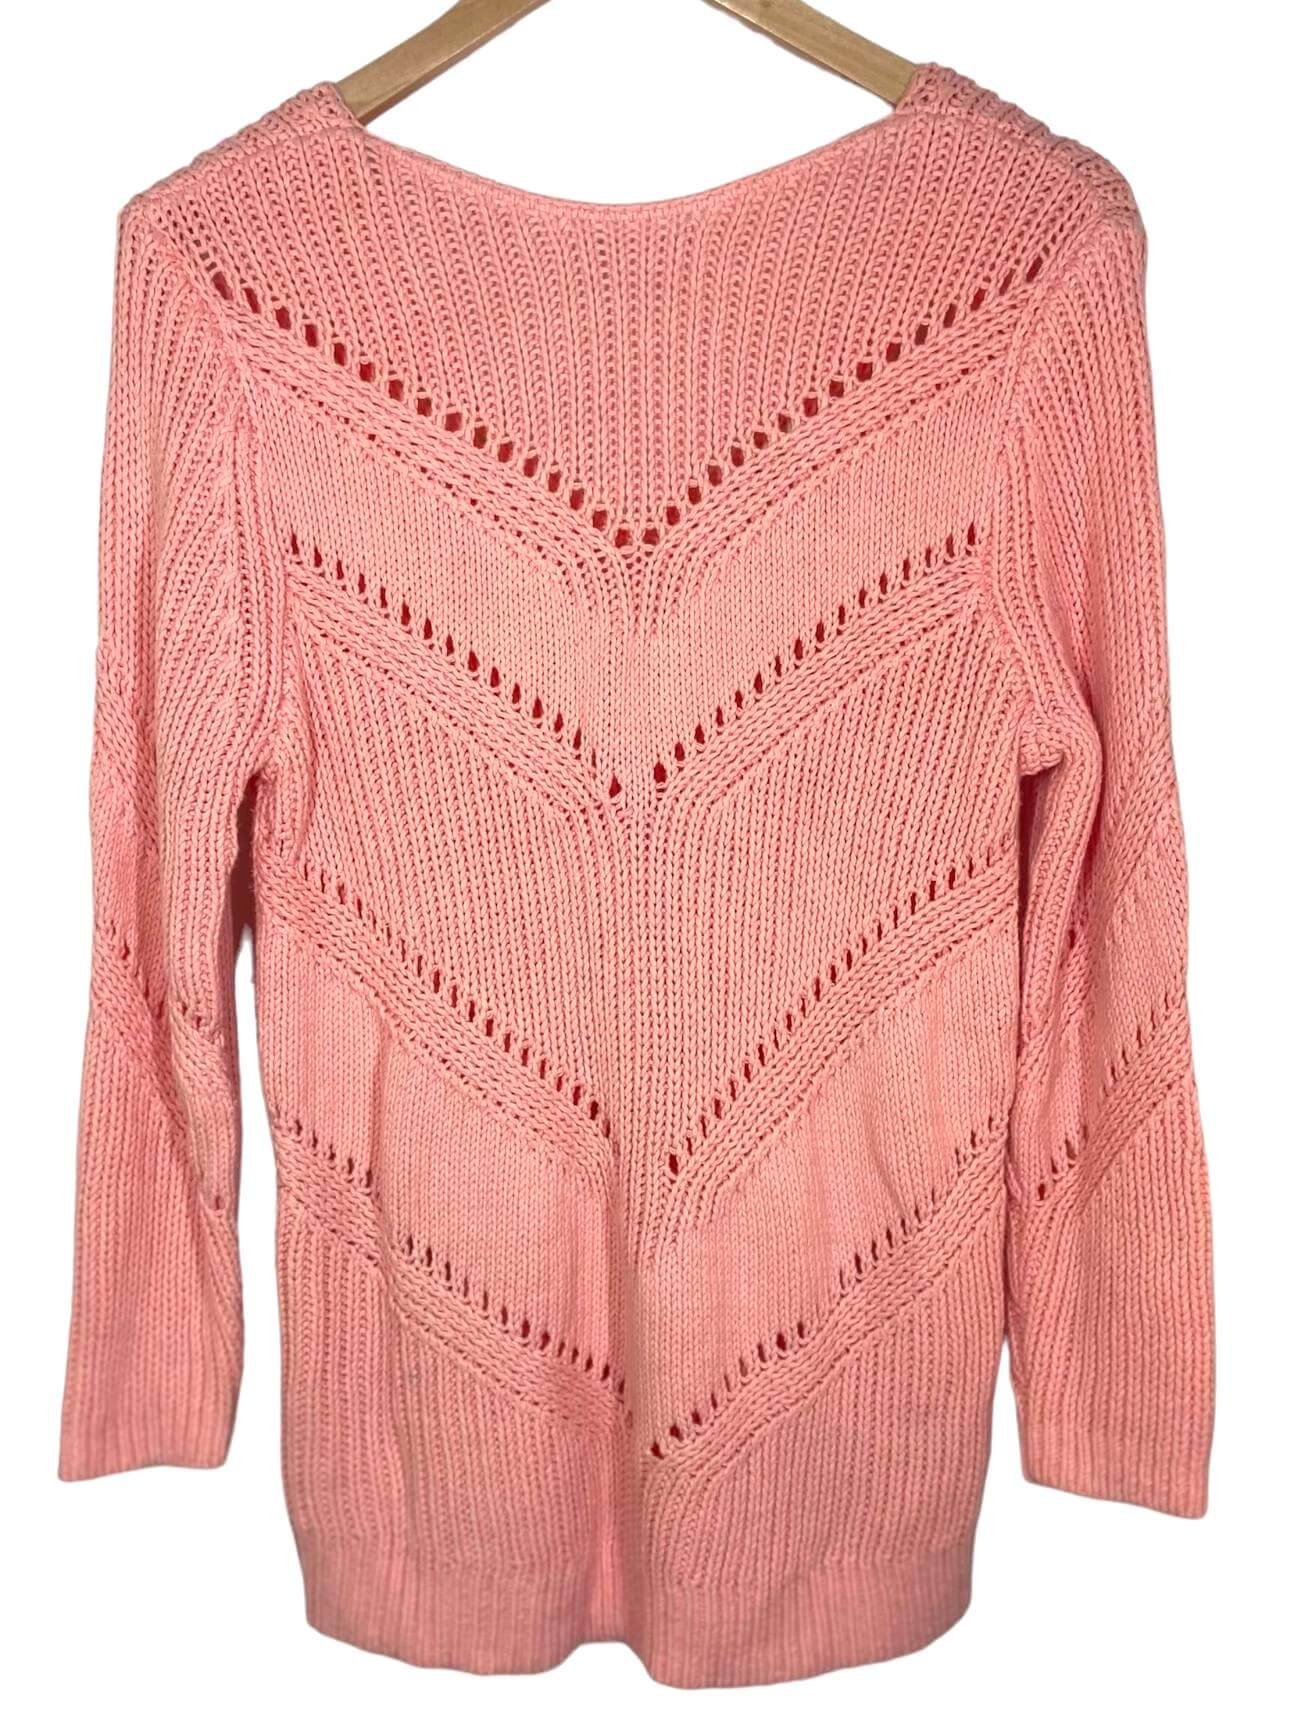 Light Spring ANN TAYLOR LOFT blush pink scoop back sweater